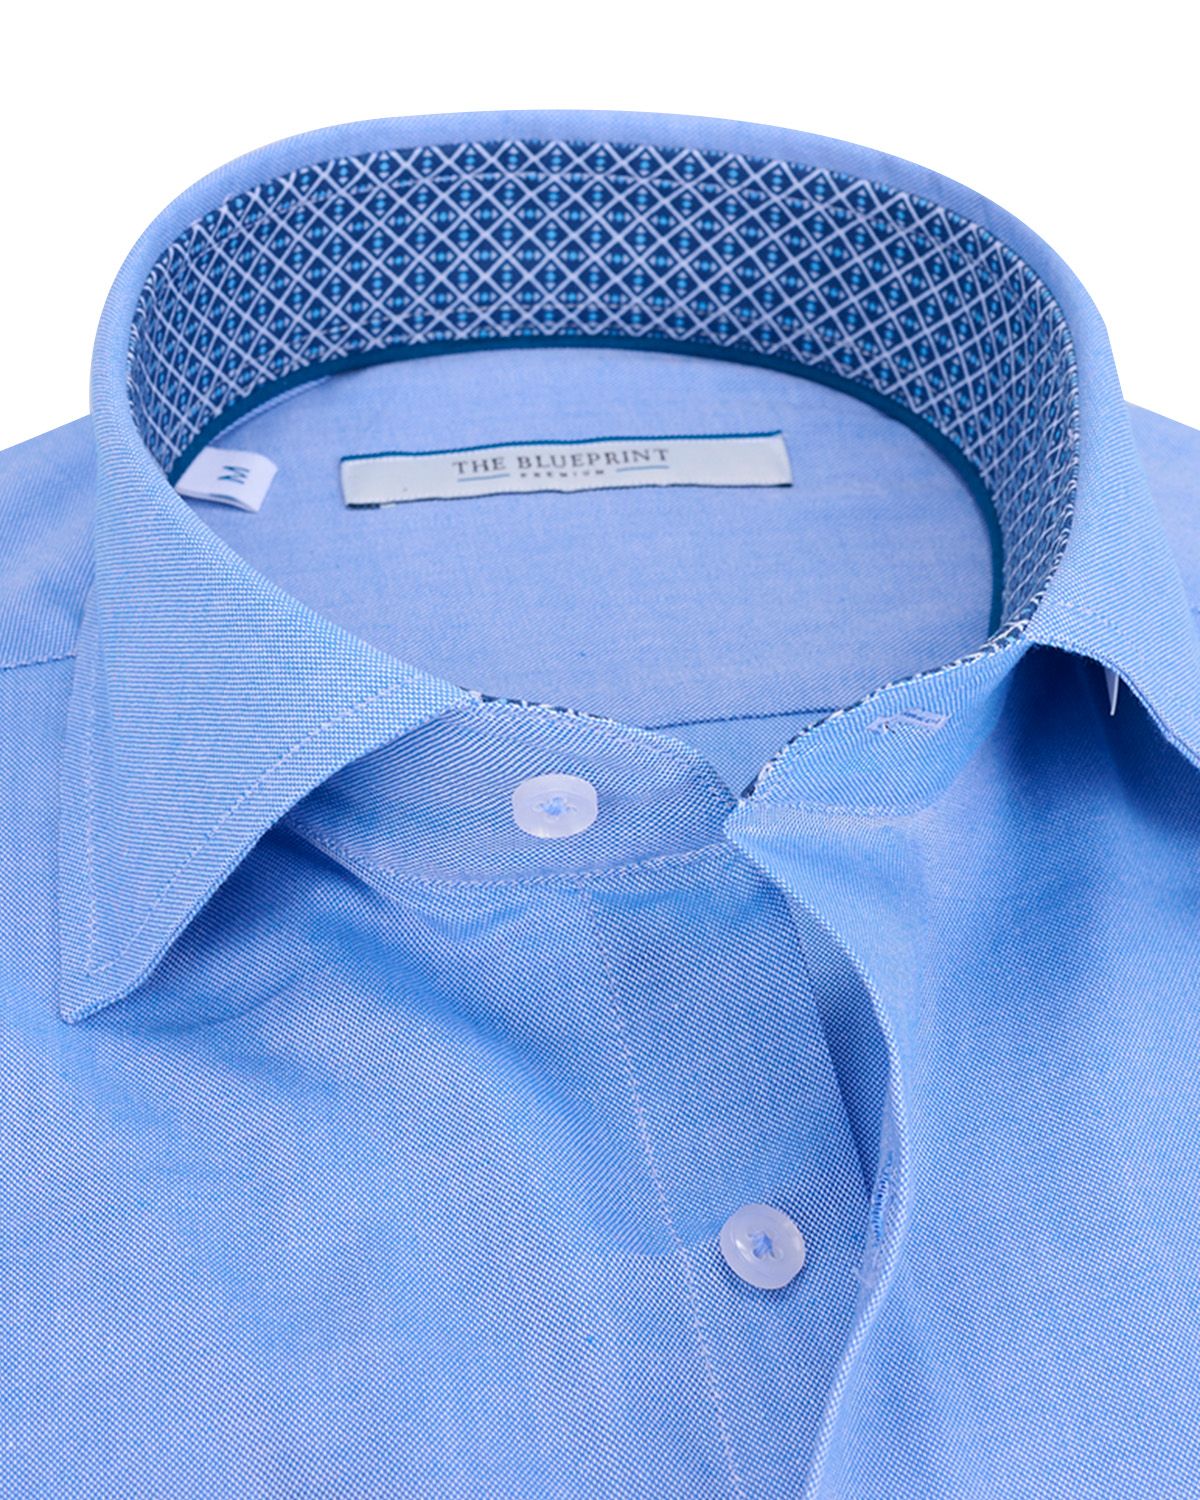 The BLUEPRINT Premium - Trendy overhemd LM Blauw uni 086643-001-L